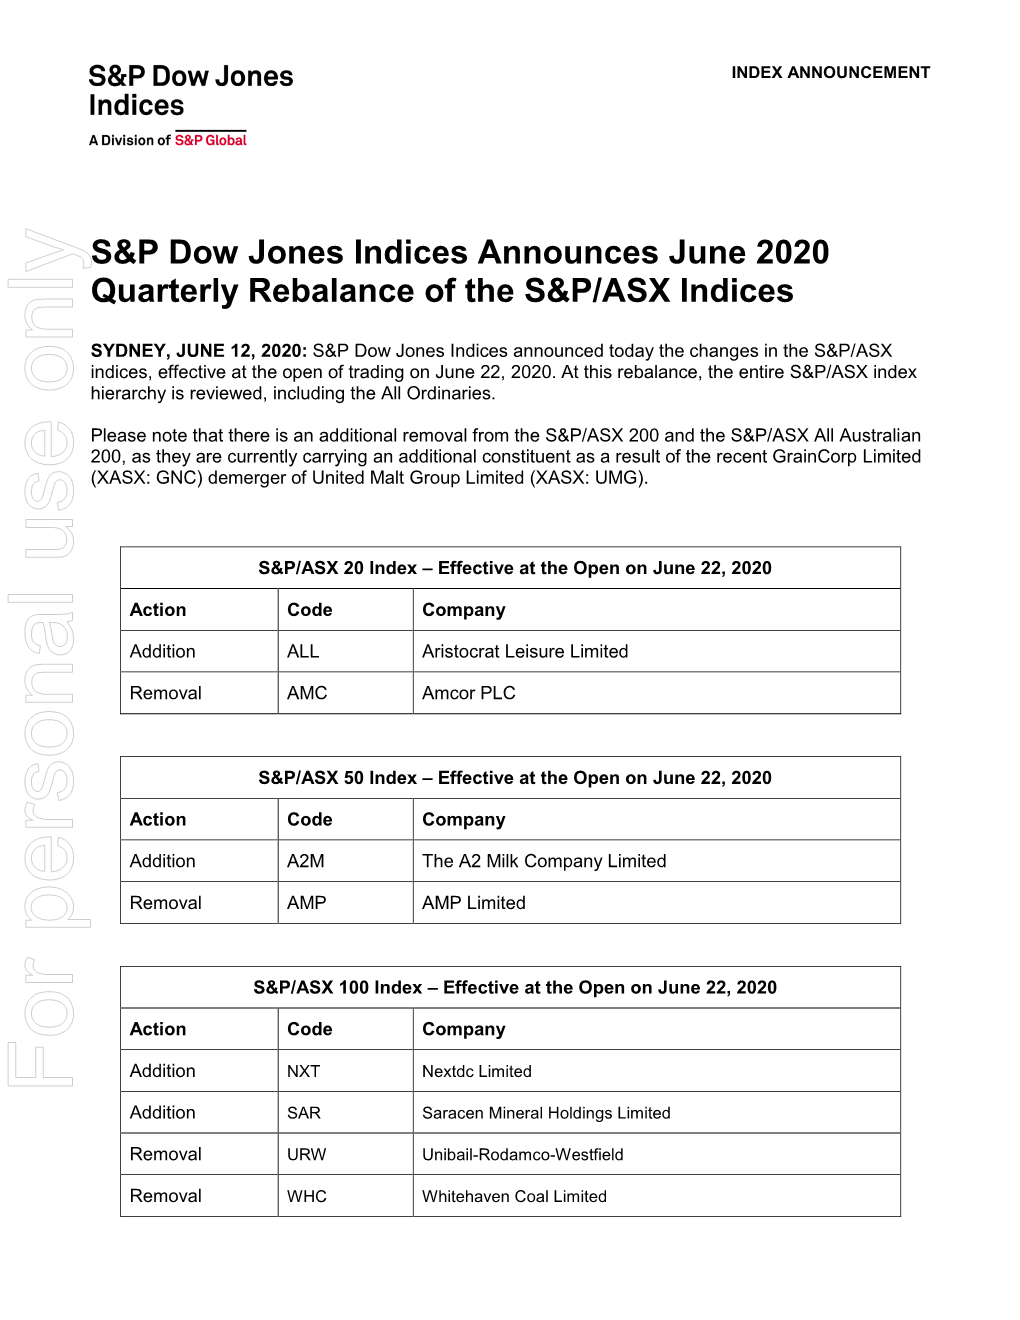 June 2020 Quarterly Rebalance of the S&P/ASX Indices